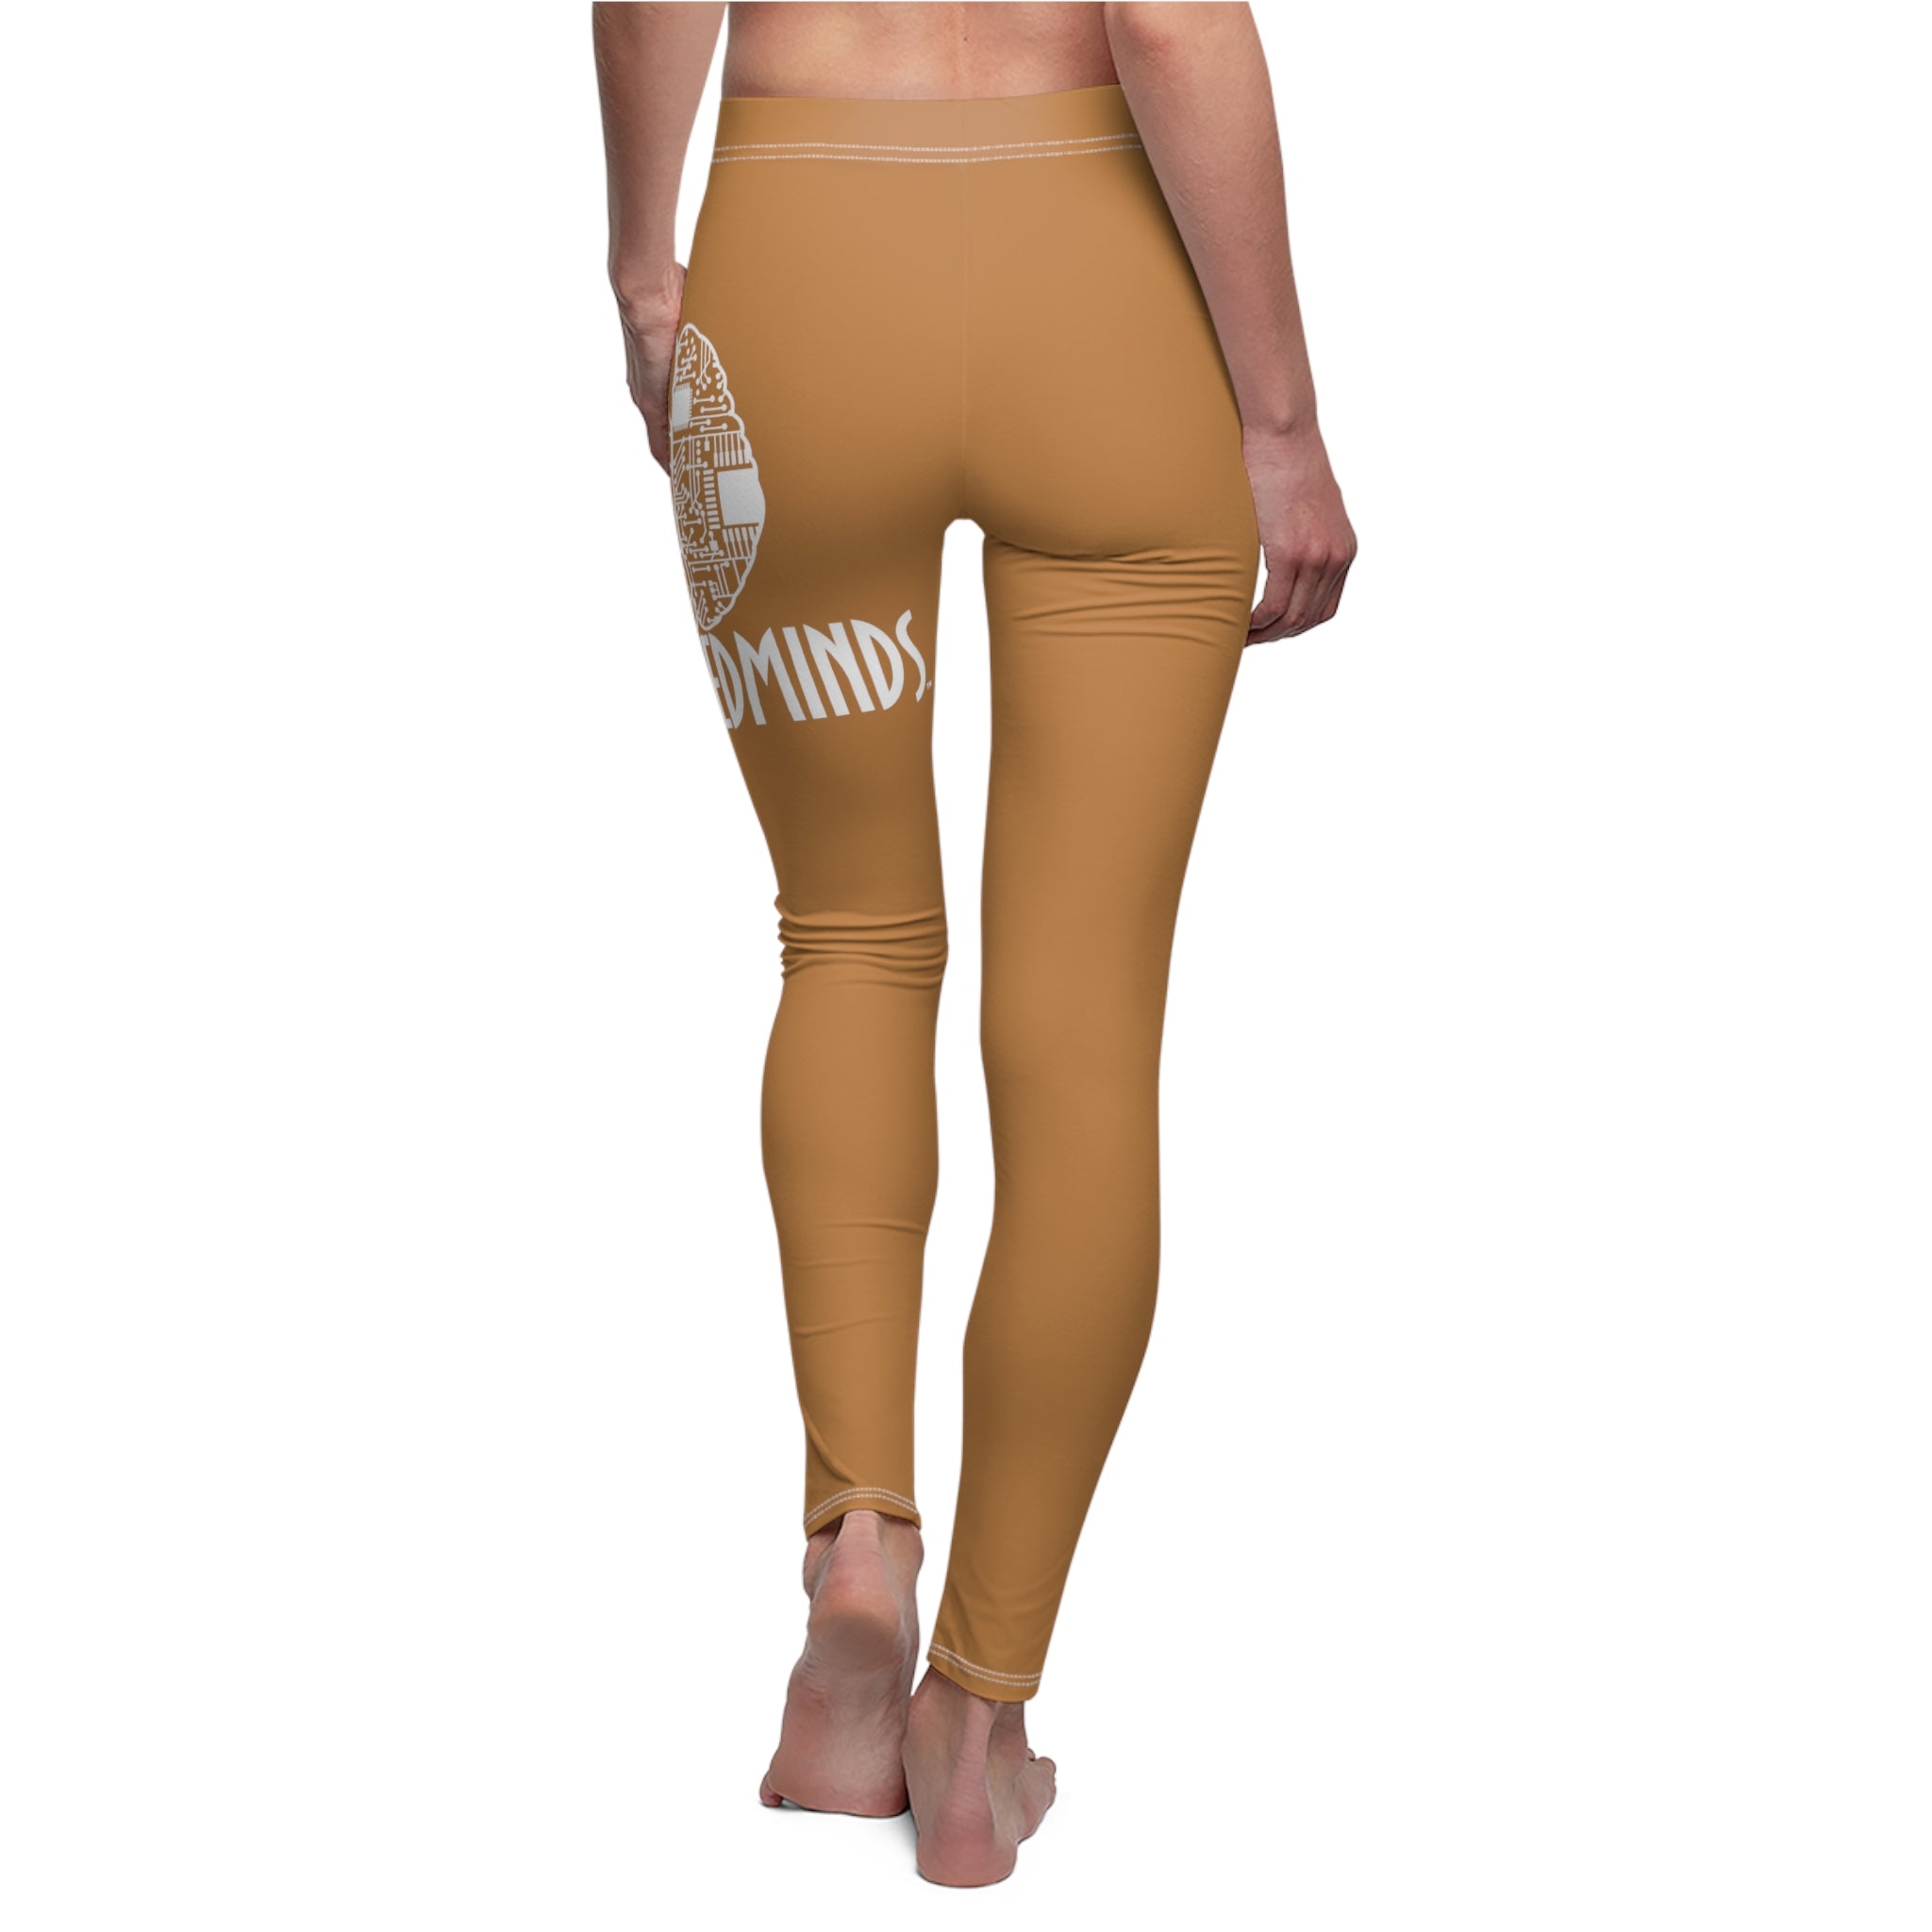 CombinedMinds Women's Cut & Sew Casual Leggings-Light Brown/White Logo